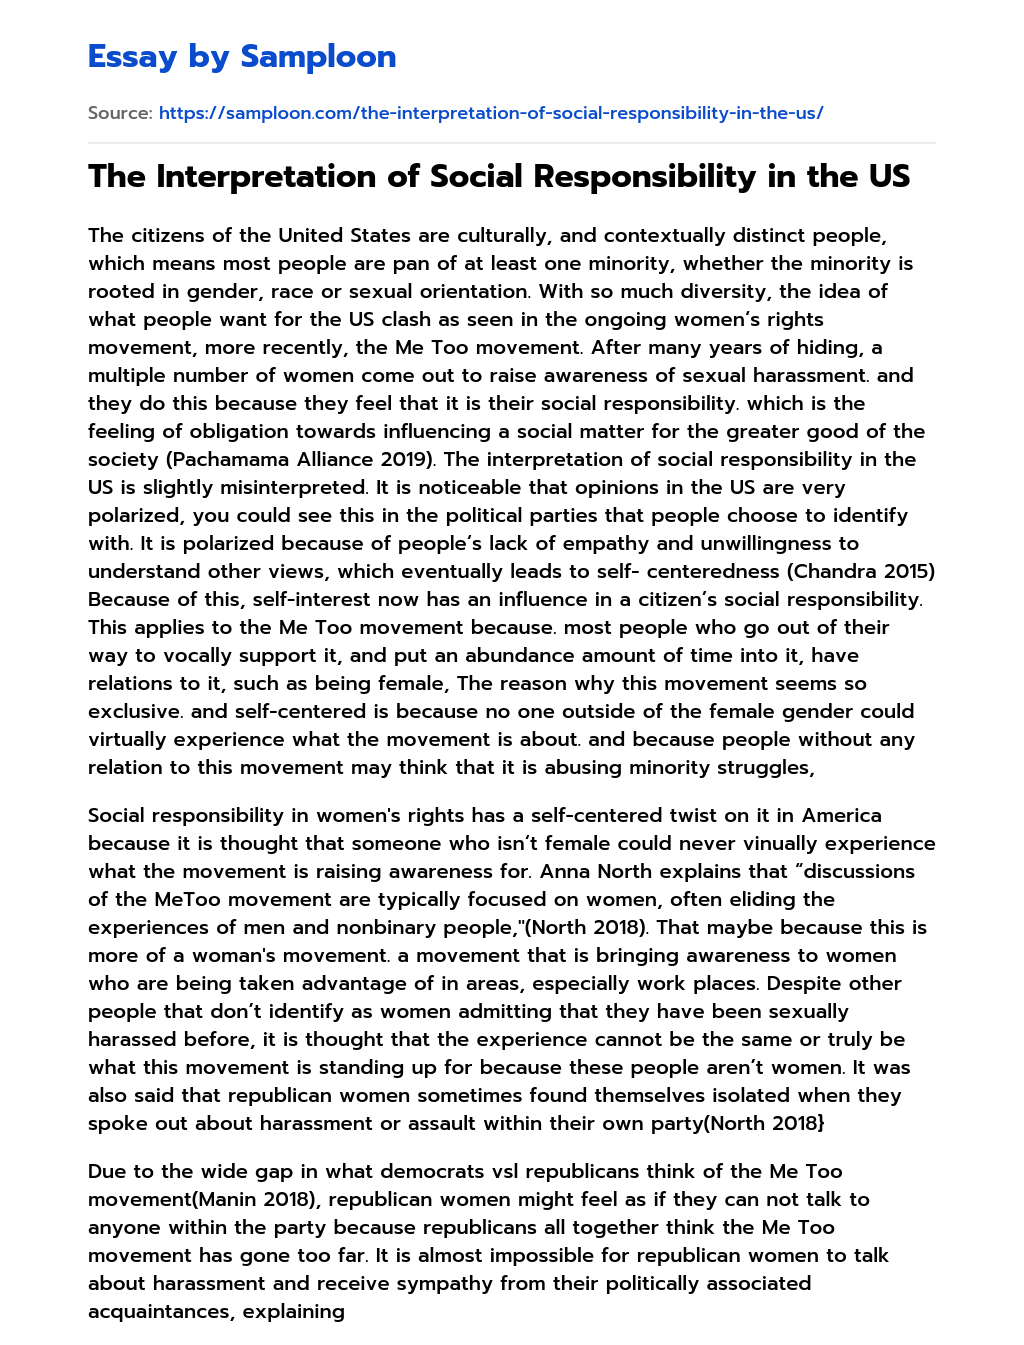 The Interpretation of Social Responsibility in the US essay